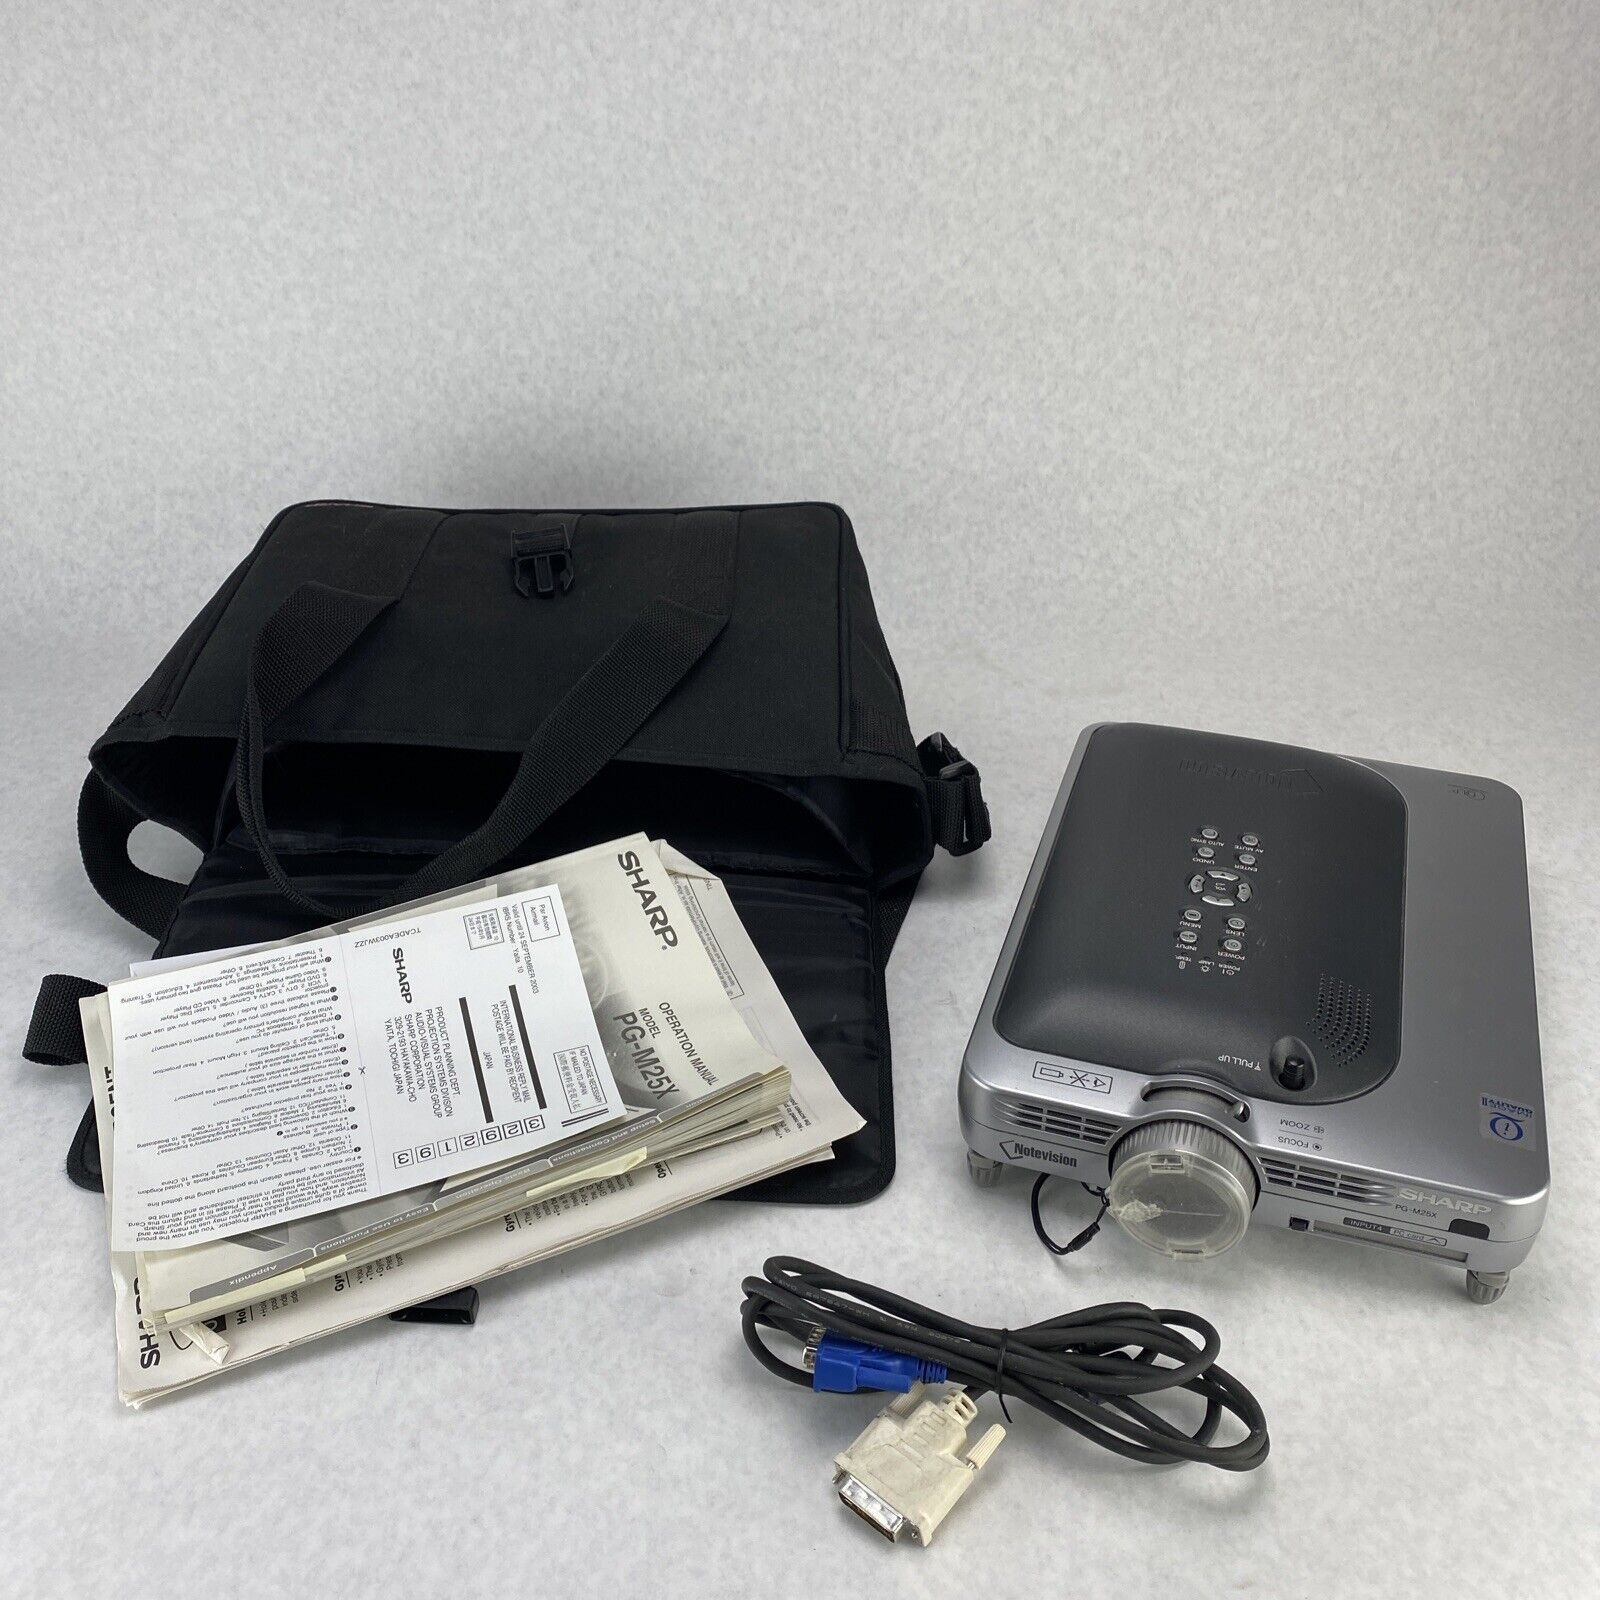 Sharp PG-M25X Notevision DLP Portable XGA Projector 1900 Lumens NO REMOTE